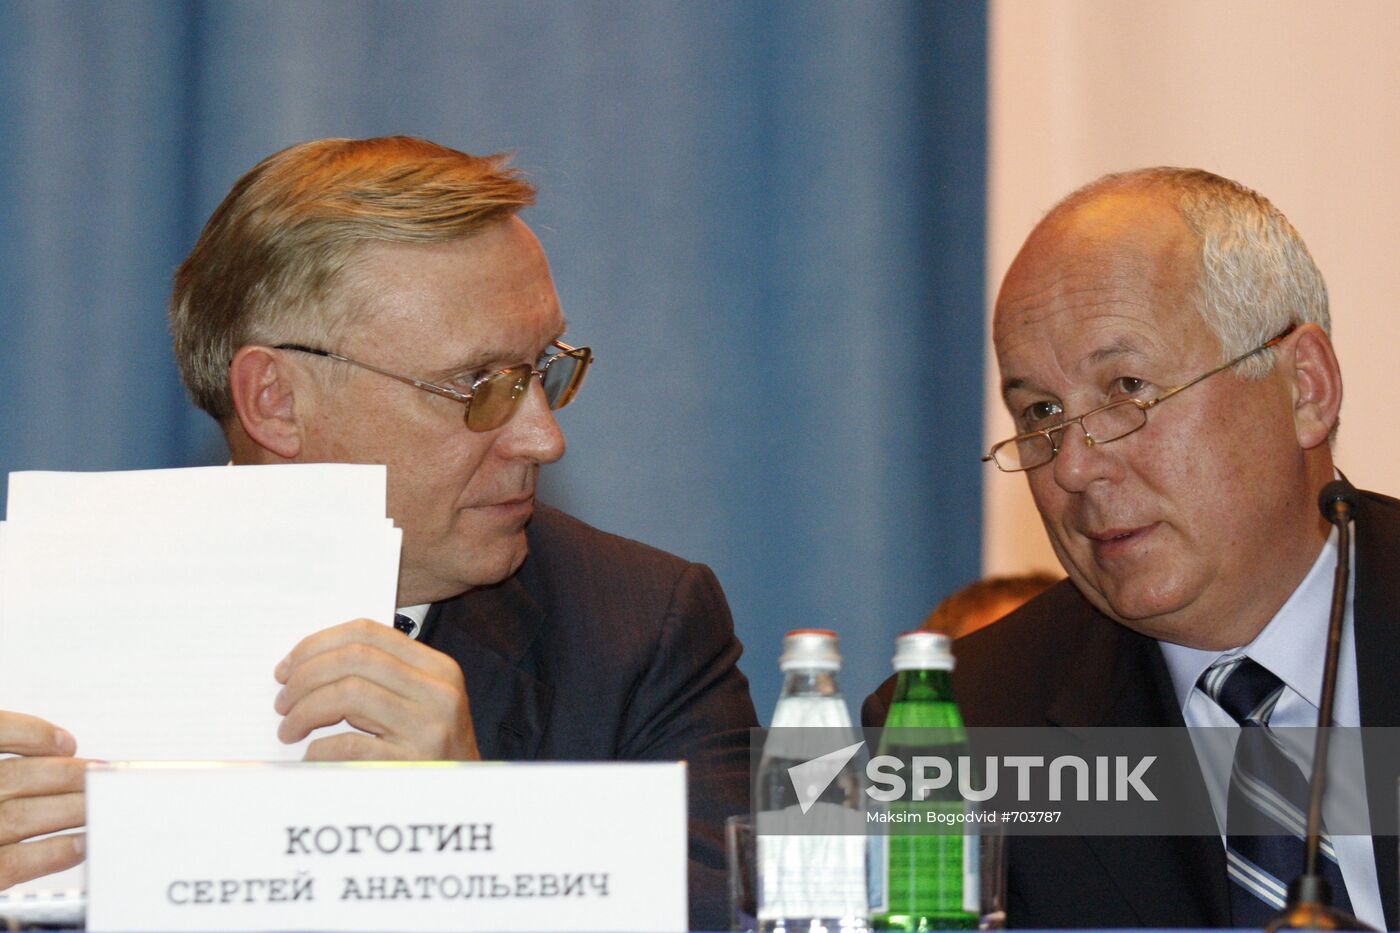 Sergei Kogogin and Sergei Chemezov